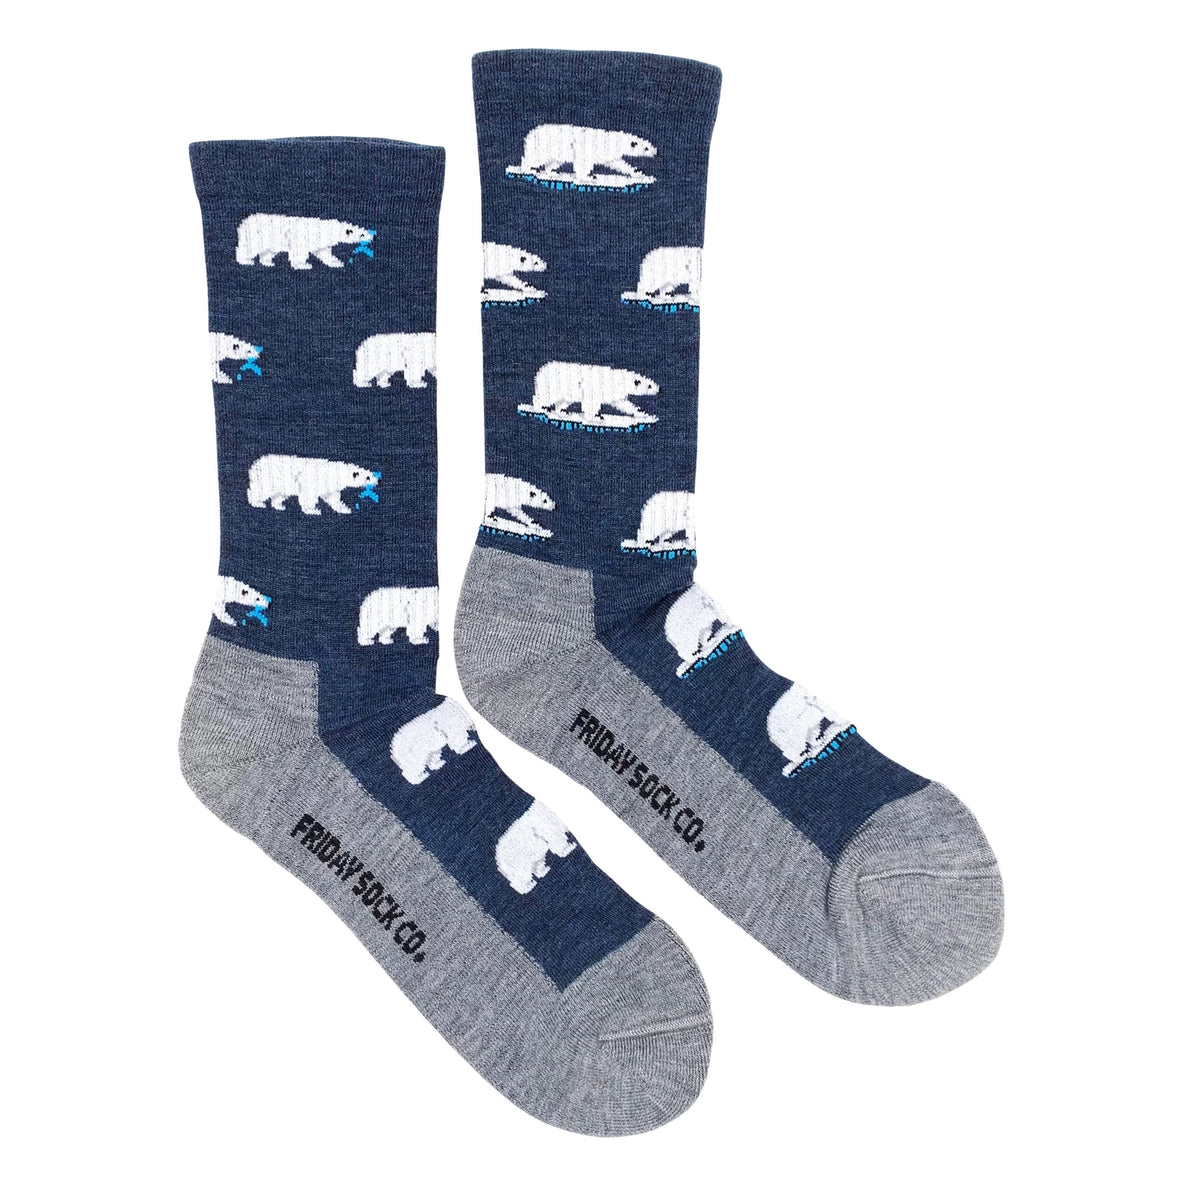 Friday Sock Co. - Men's Socks Polar Bear Mismatched